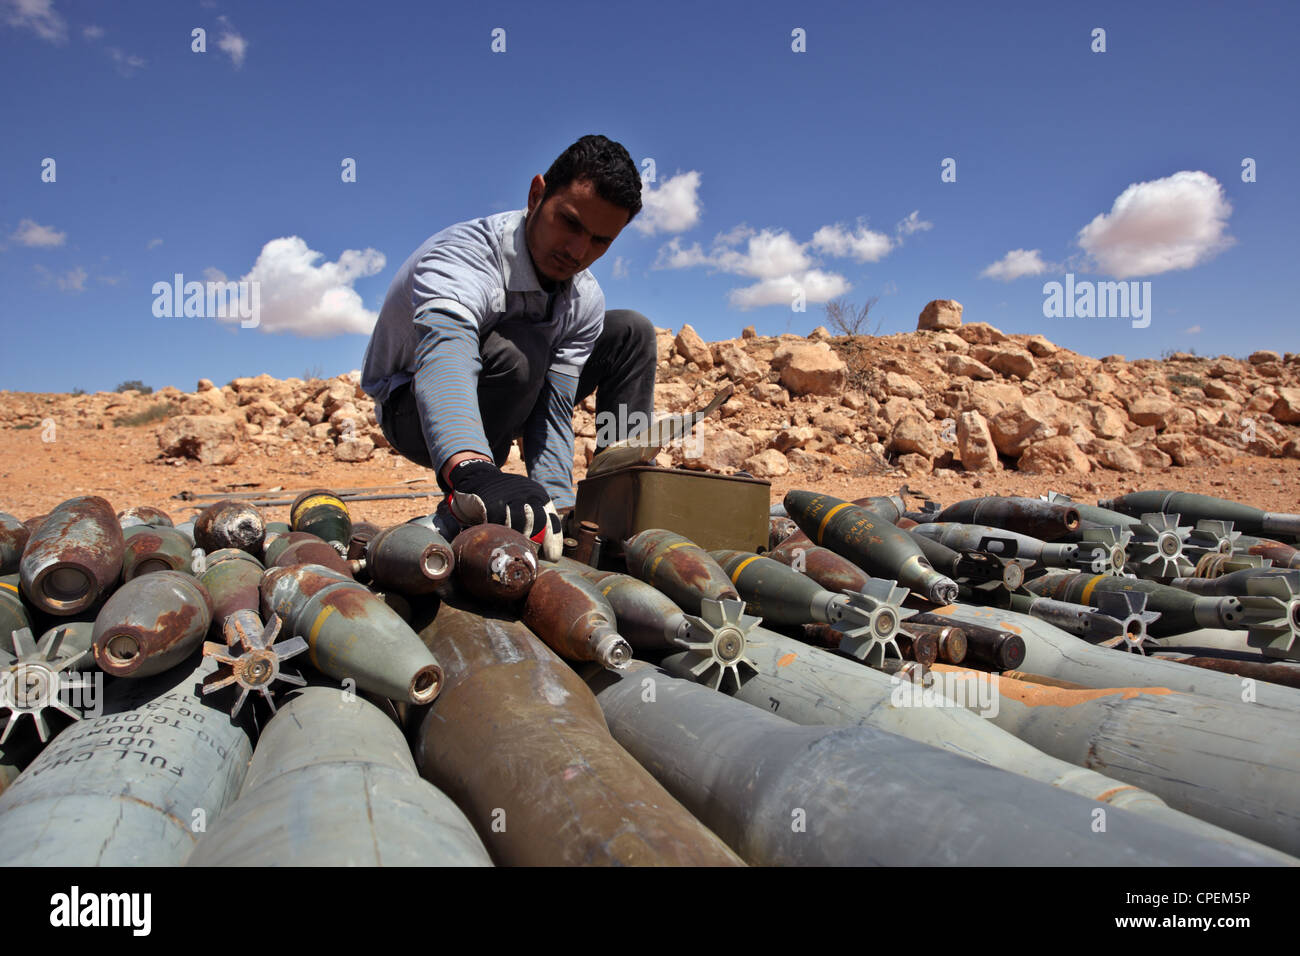 Preparation of demolition of unexploded ordnance near Sirte, Libya Stock Photo